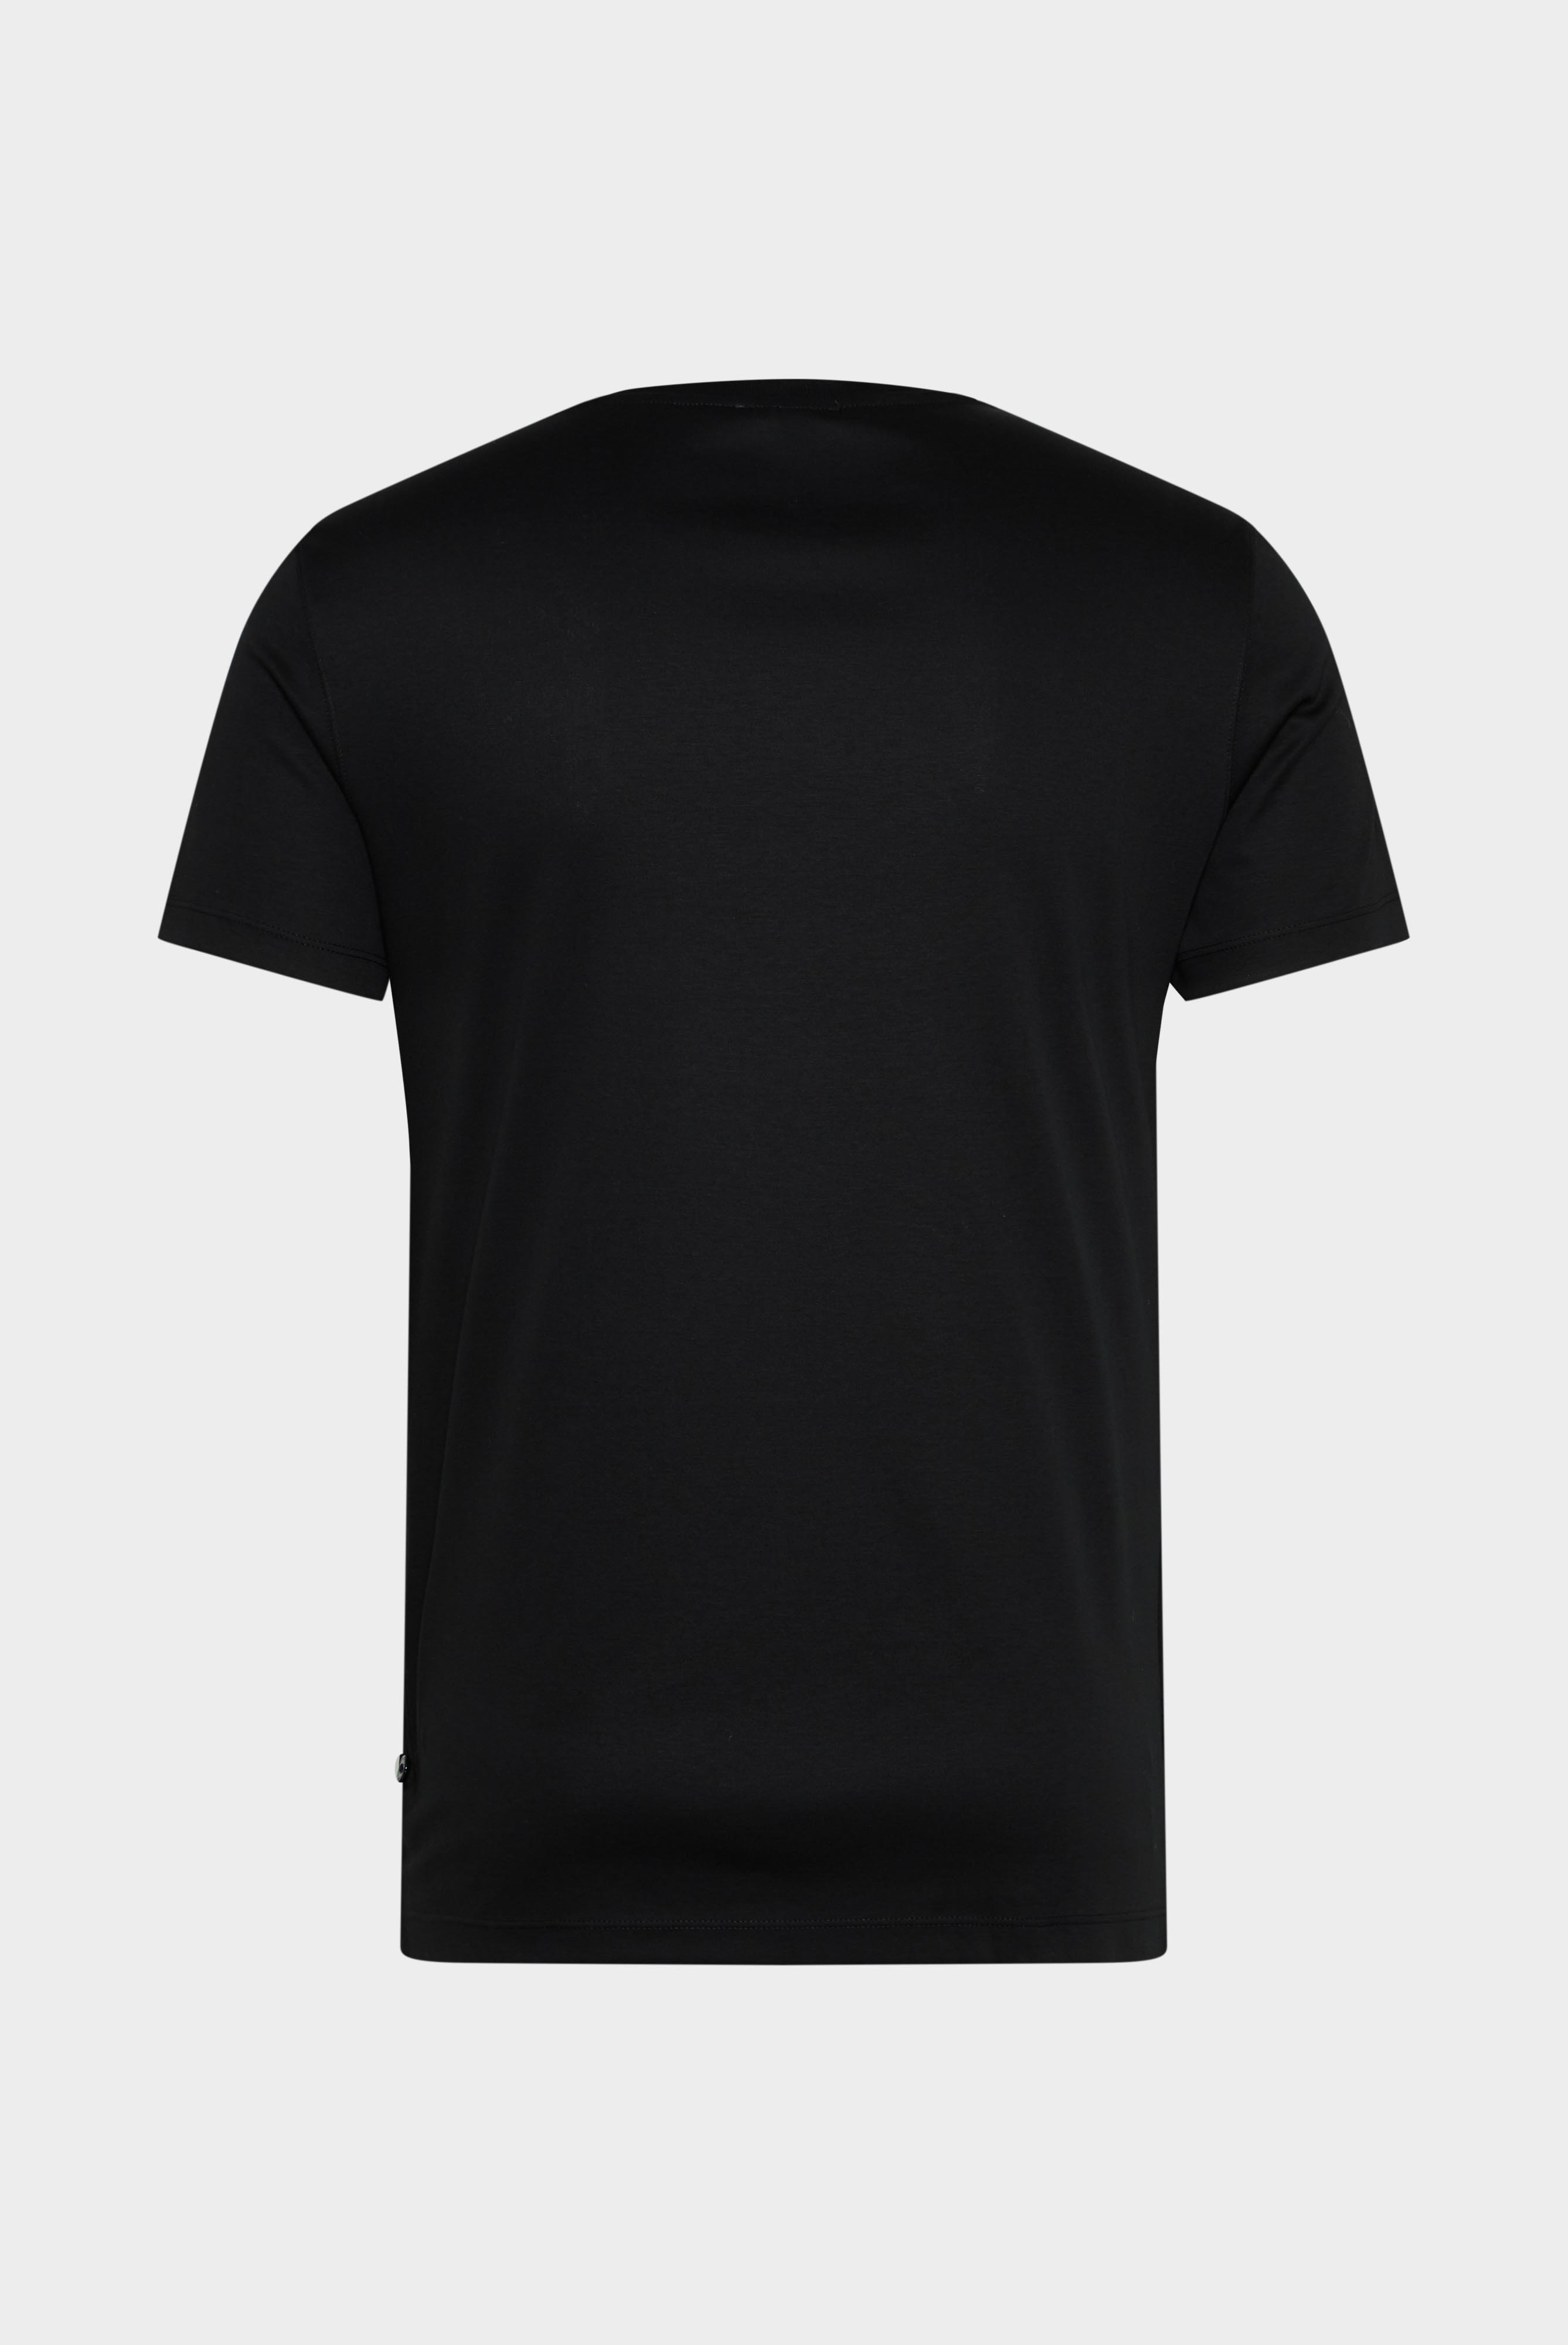 T-Shirts+Swiss Cotton Jersey Crew Neck T-Shirt+20.1717.UX.180031.099.X3L